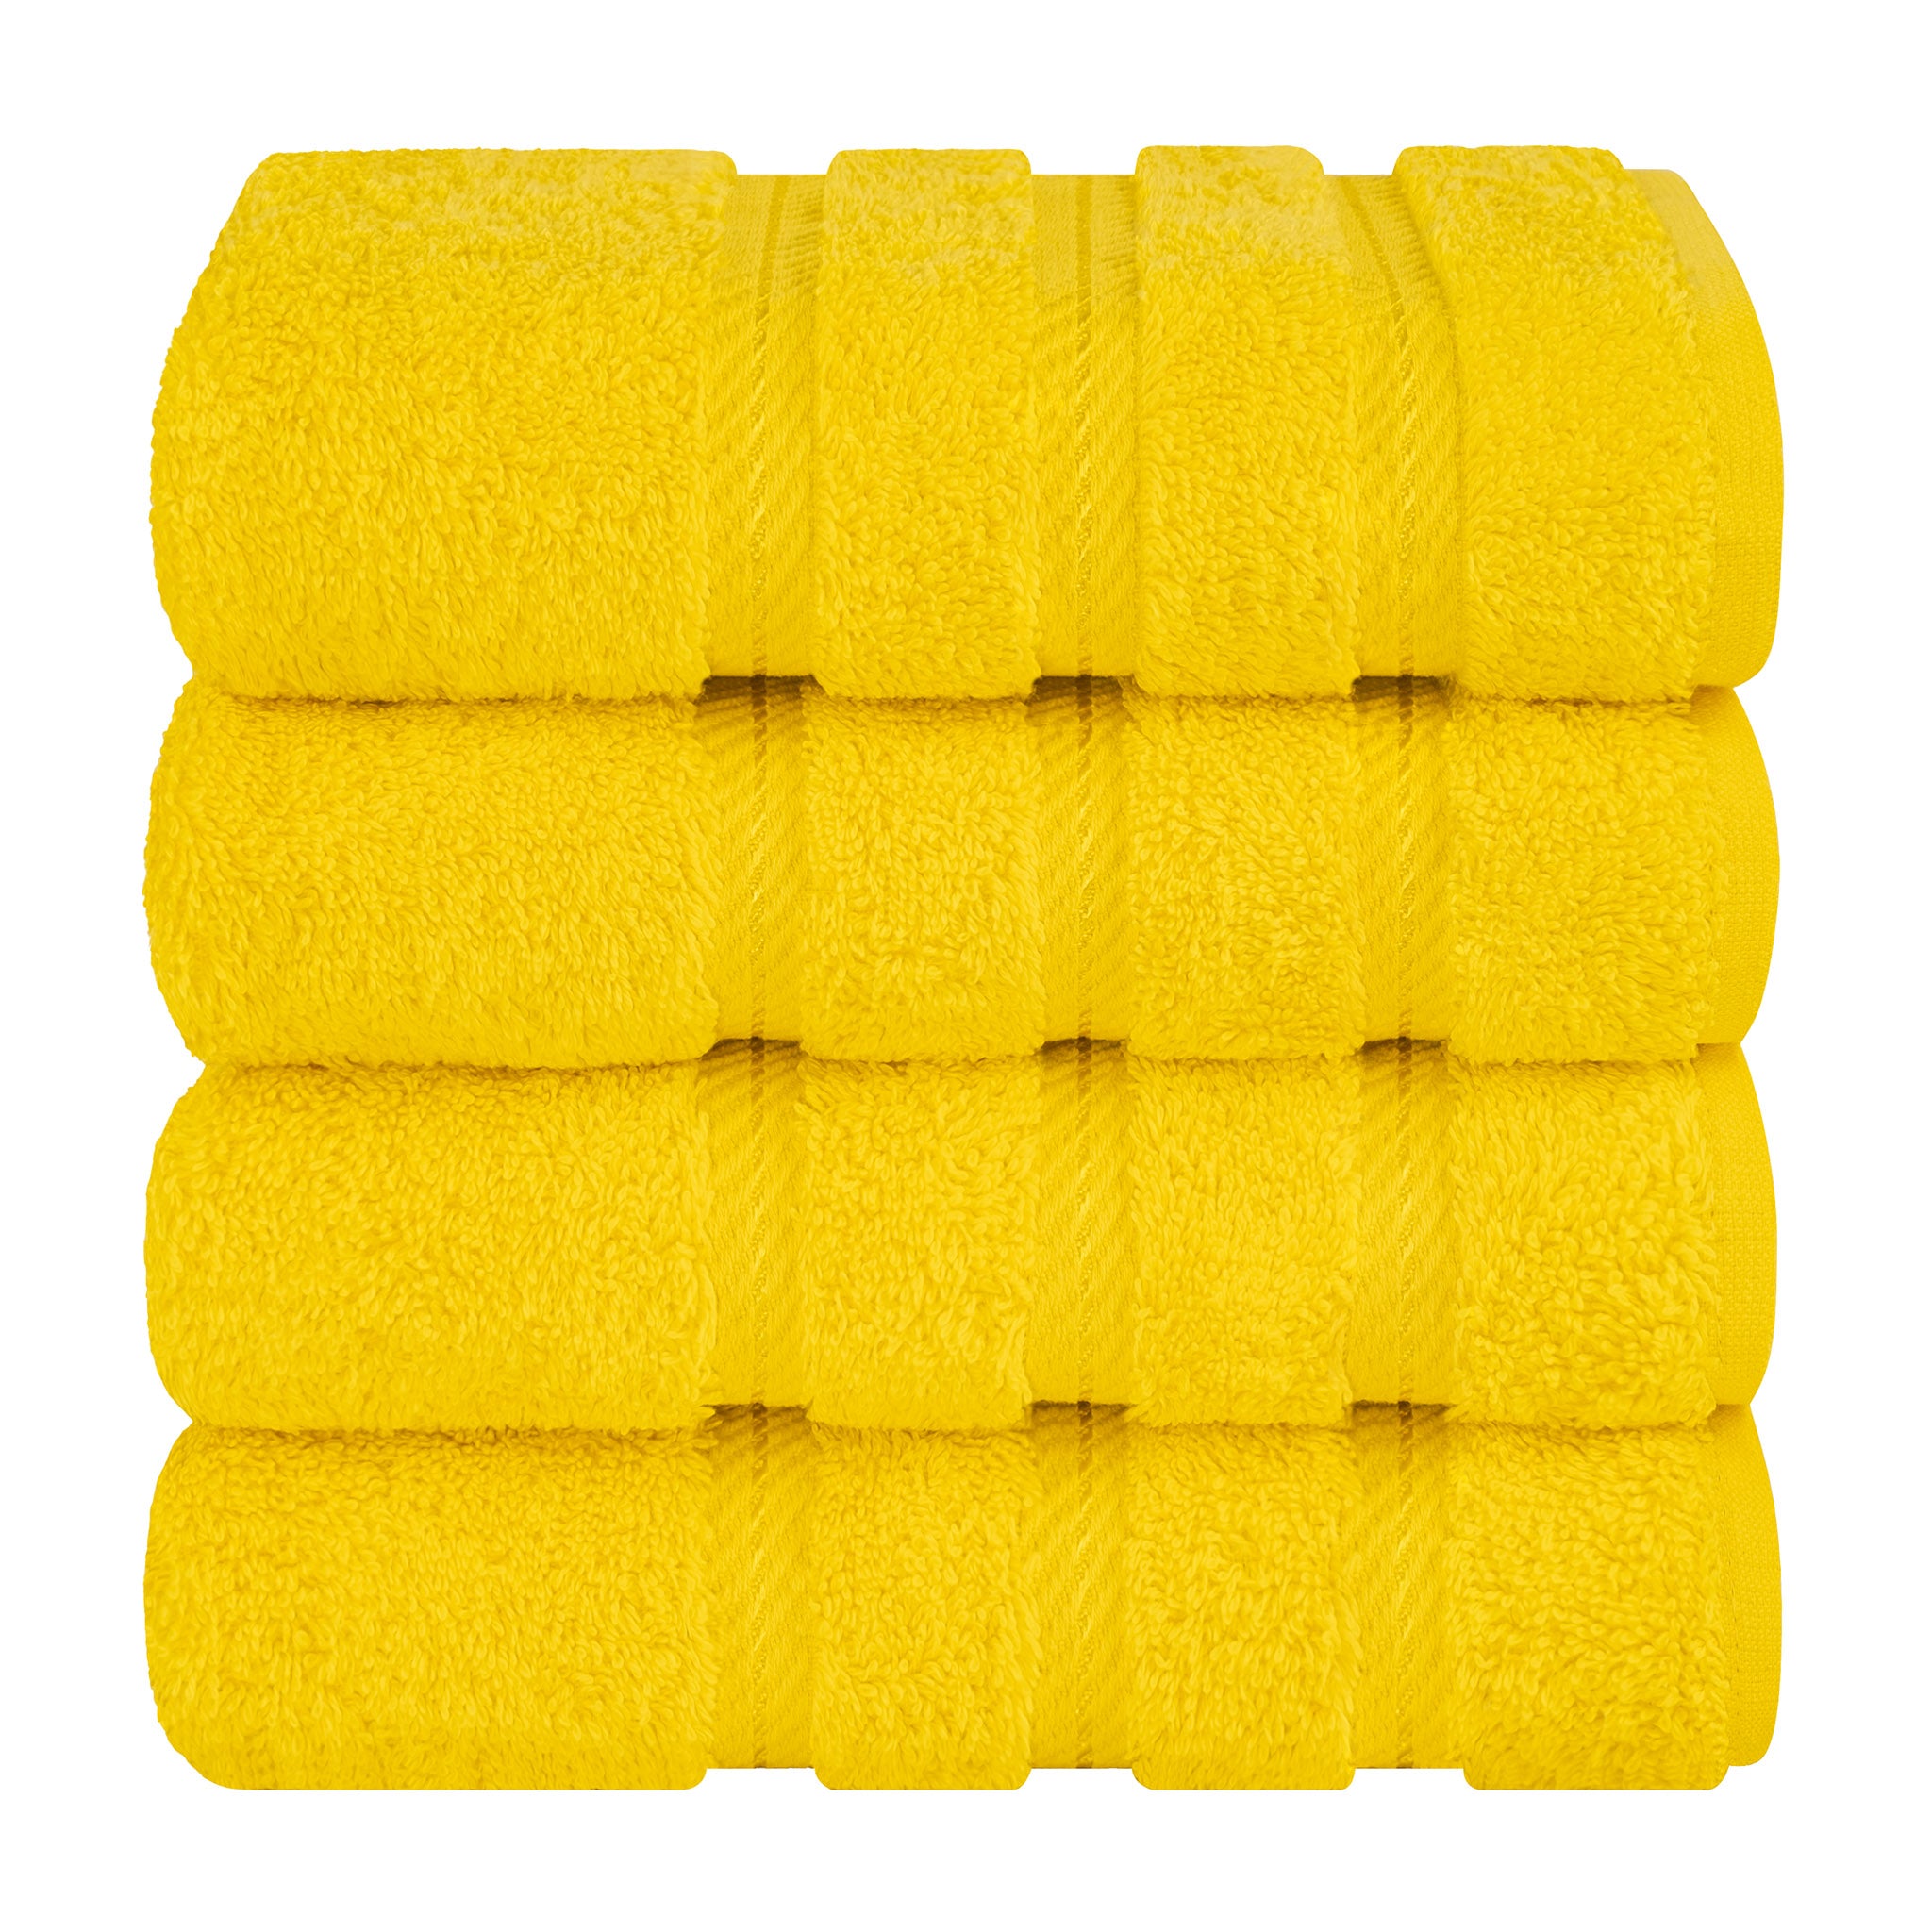  American Soft Linen 100% Turkish Cotton 4 Pack Hand Towel Set  yellow-7